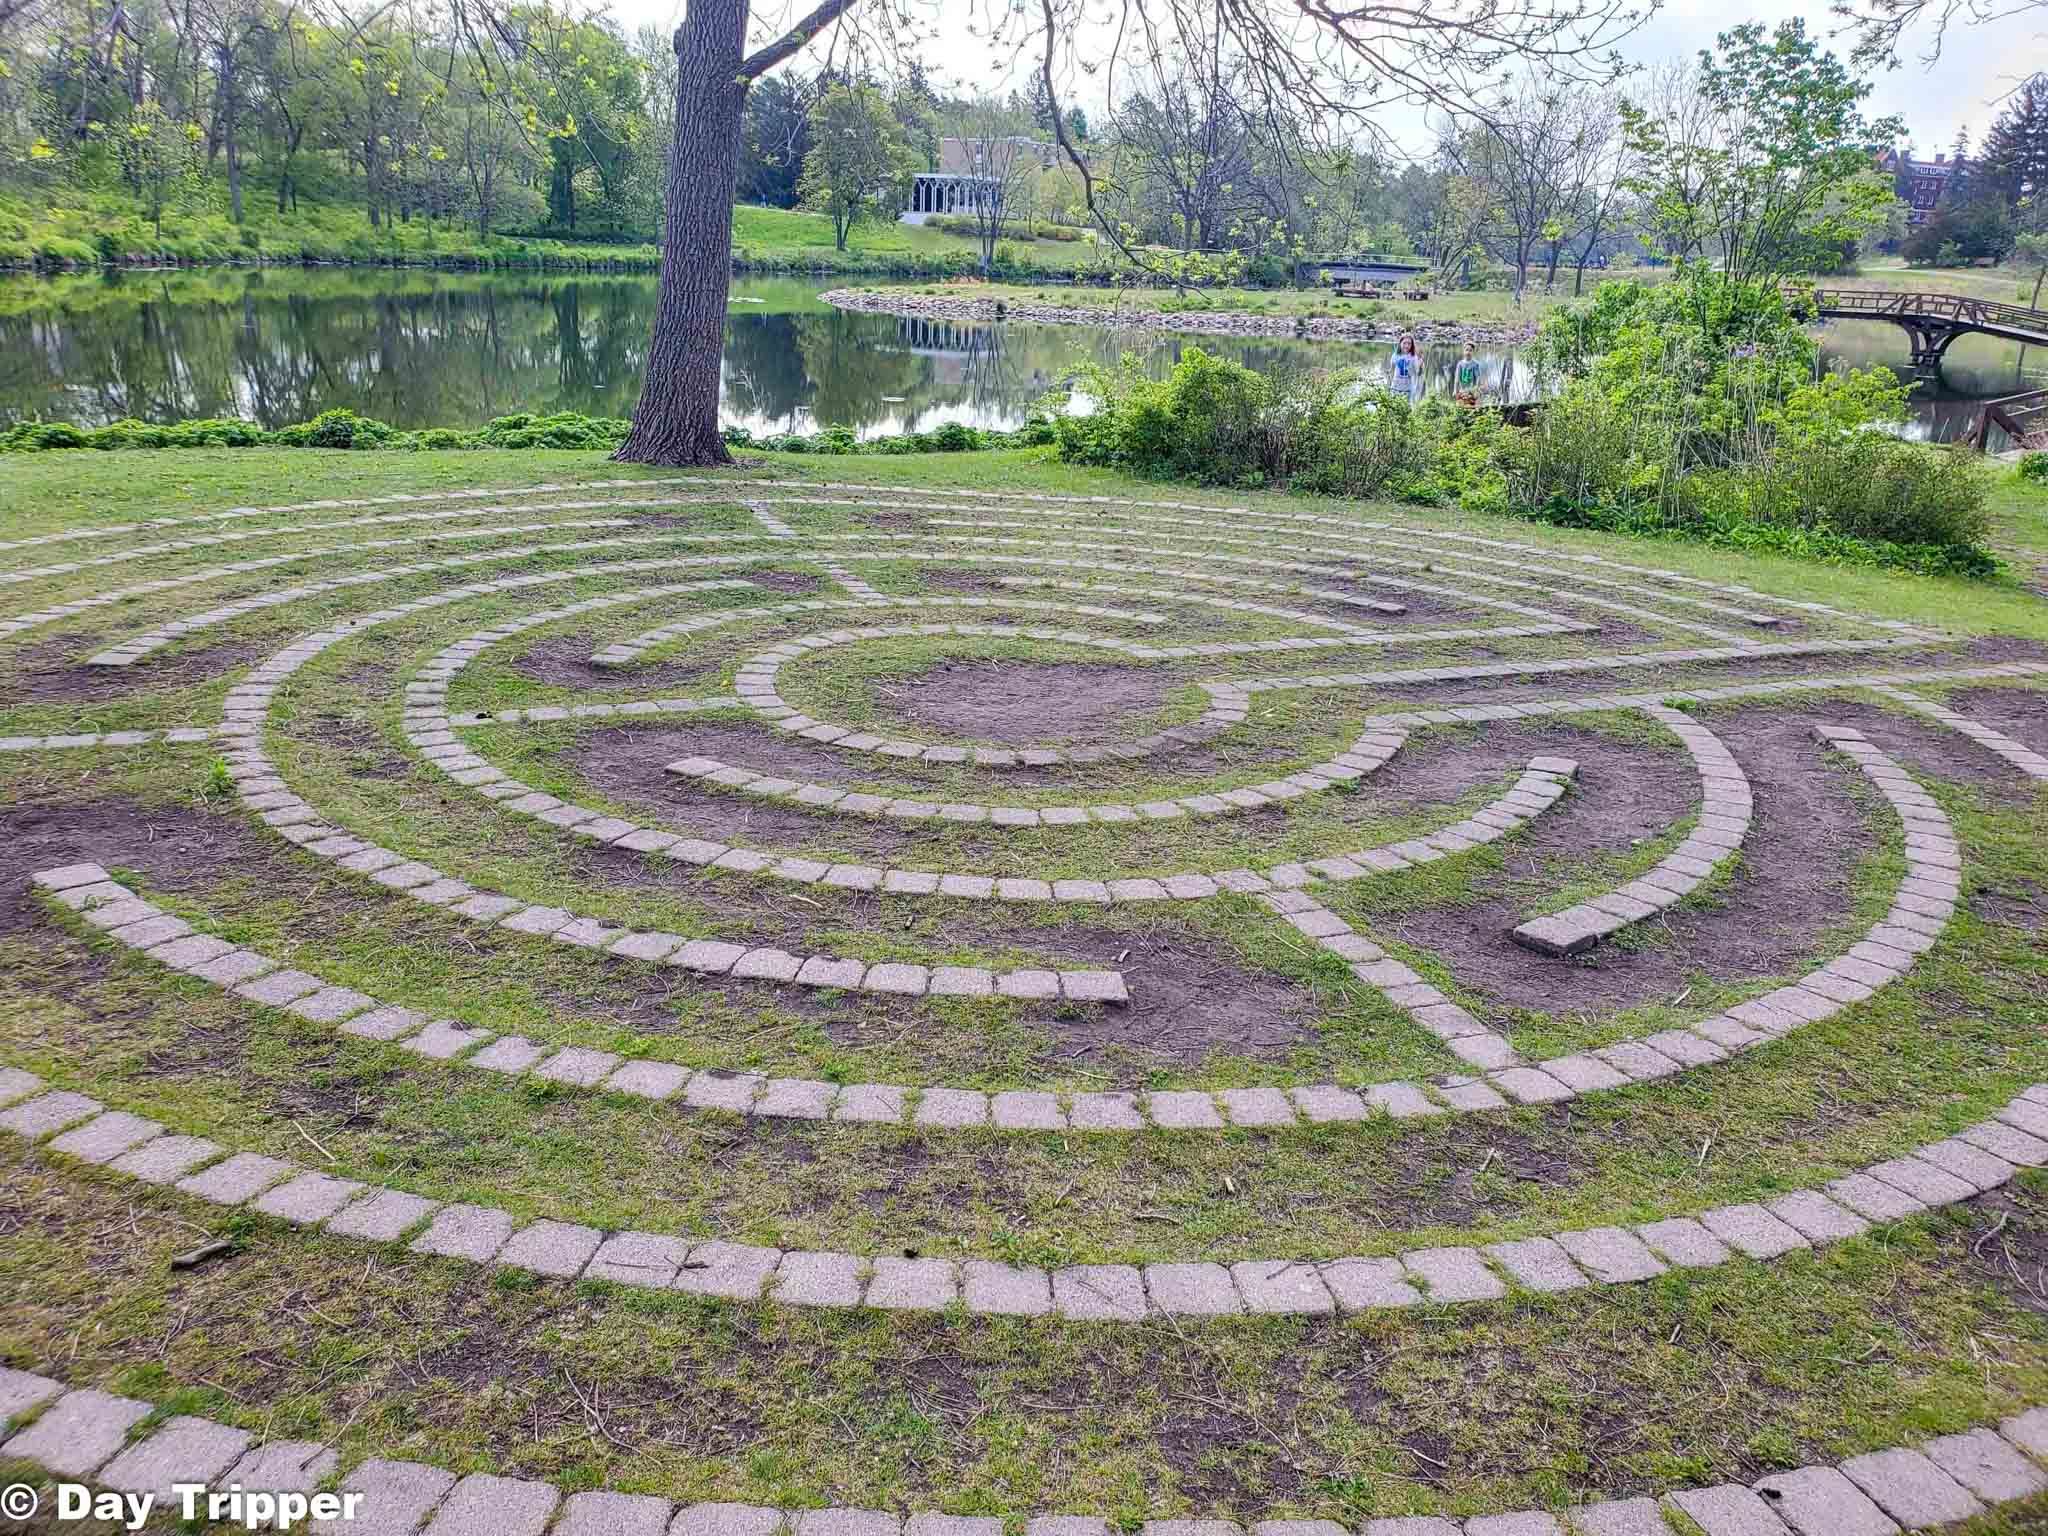 Labyrinth